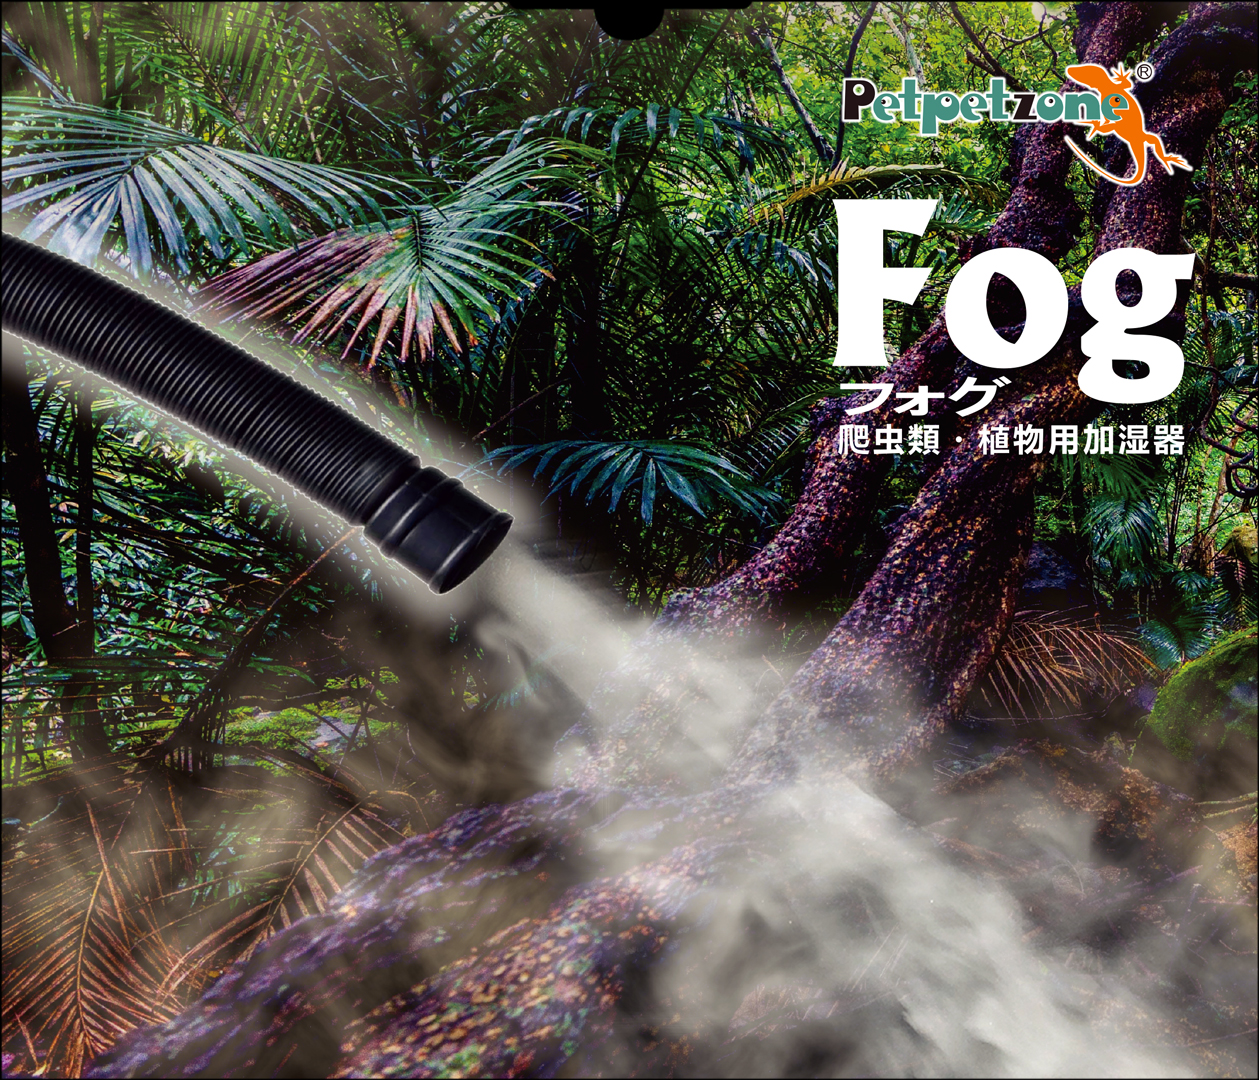 Fog (フォグ) ゼンスイ PetpetZone 爬虫類/植物用加湿器 販売 通販